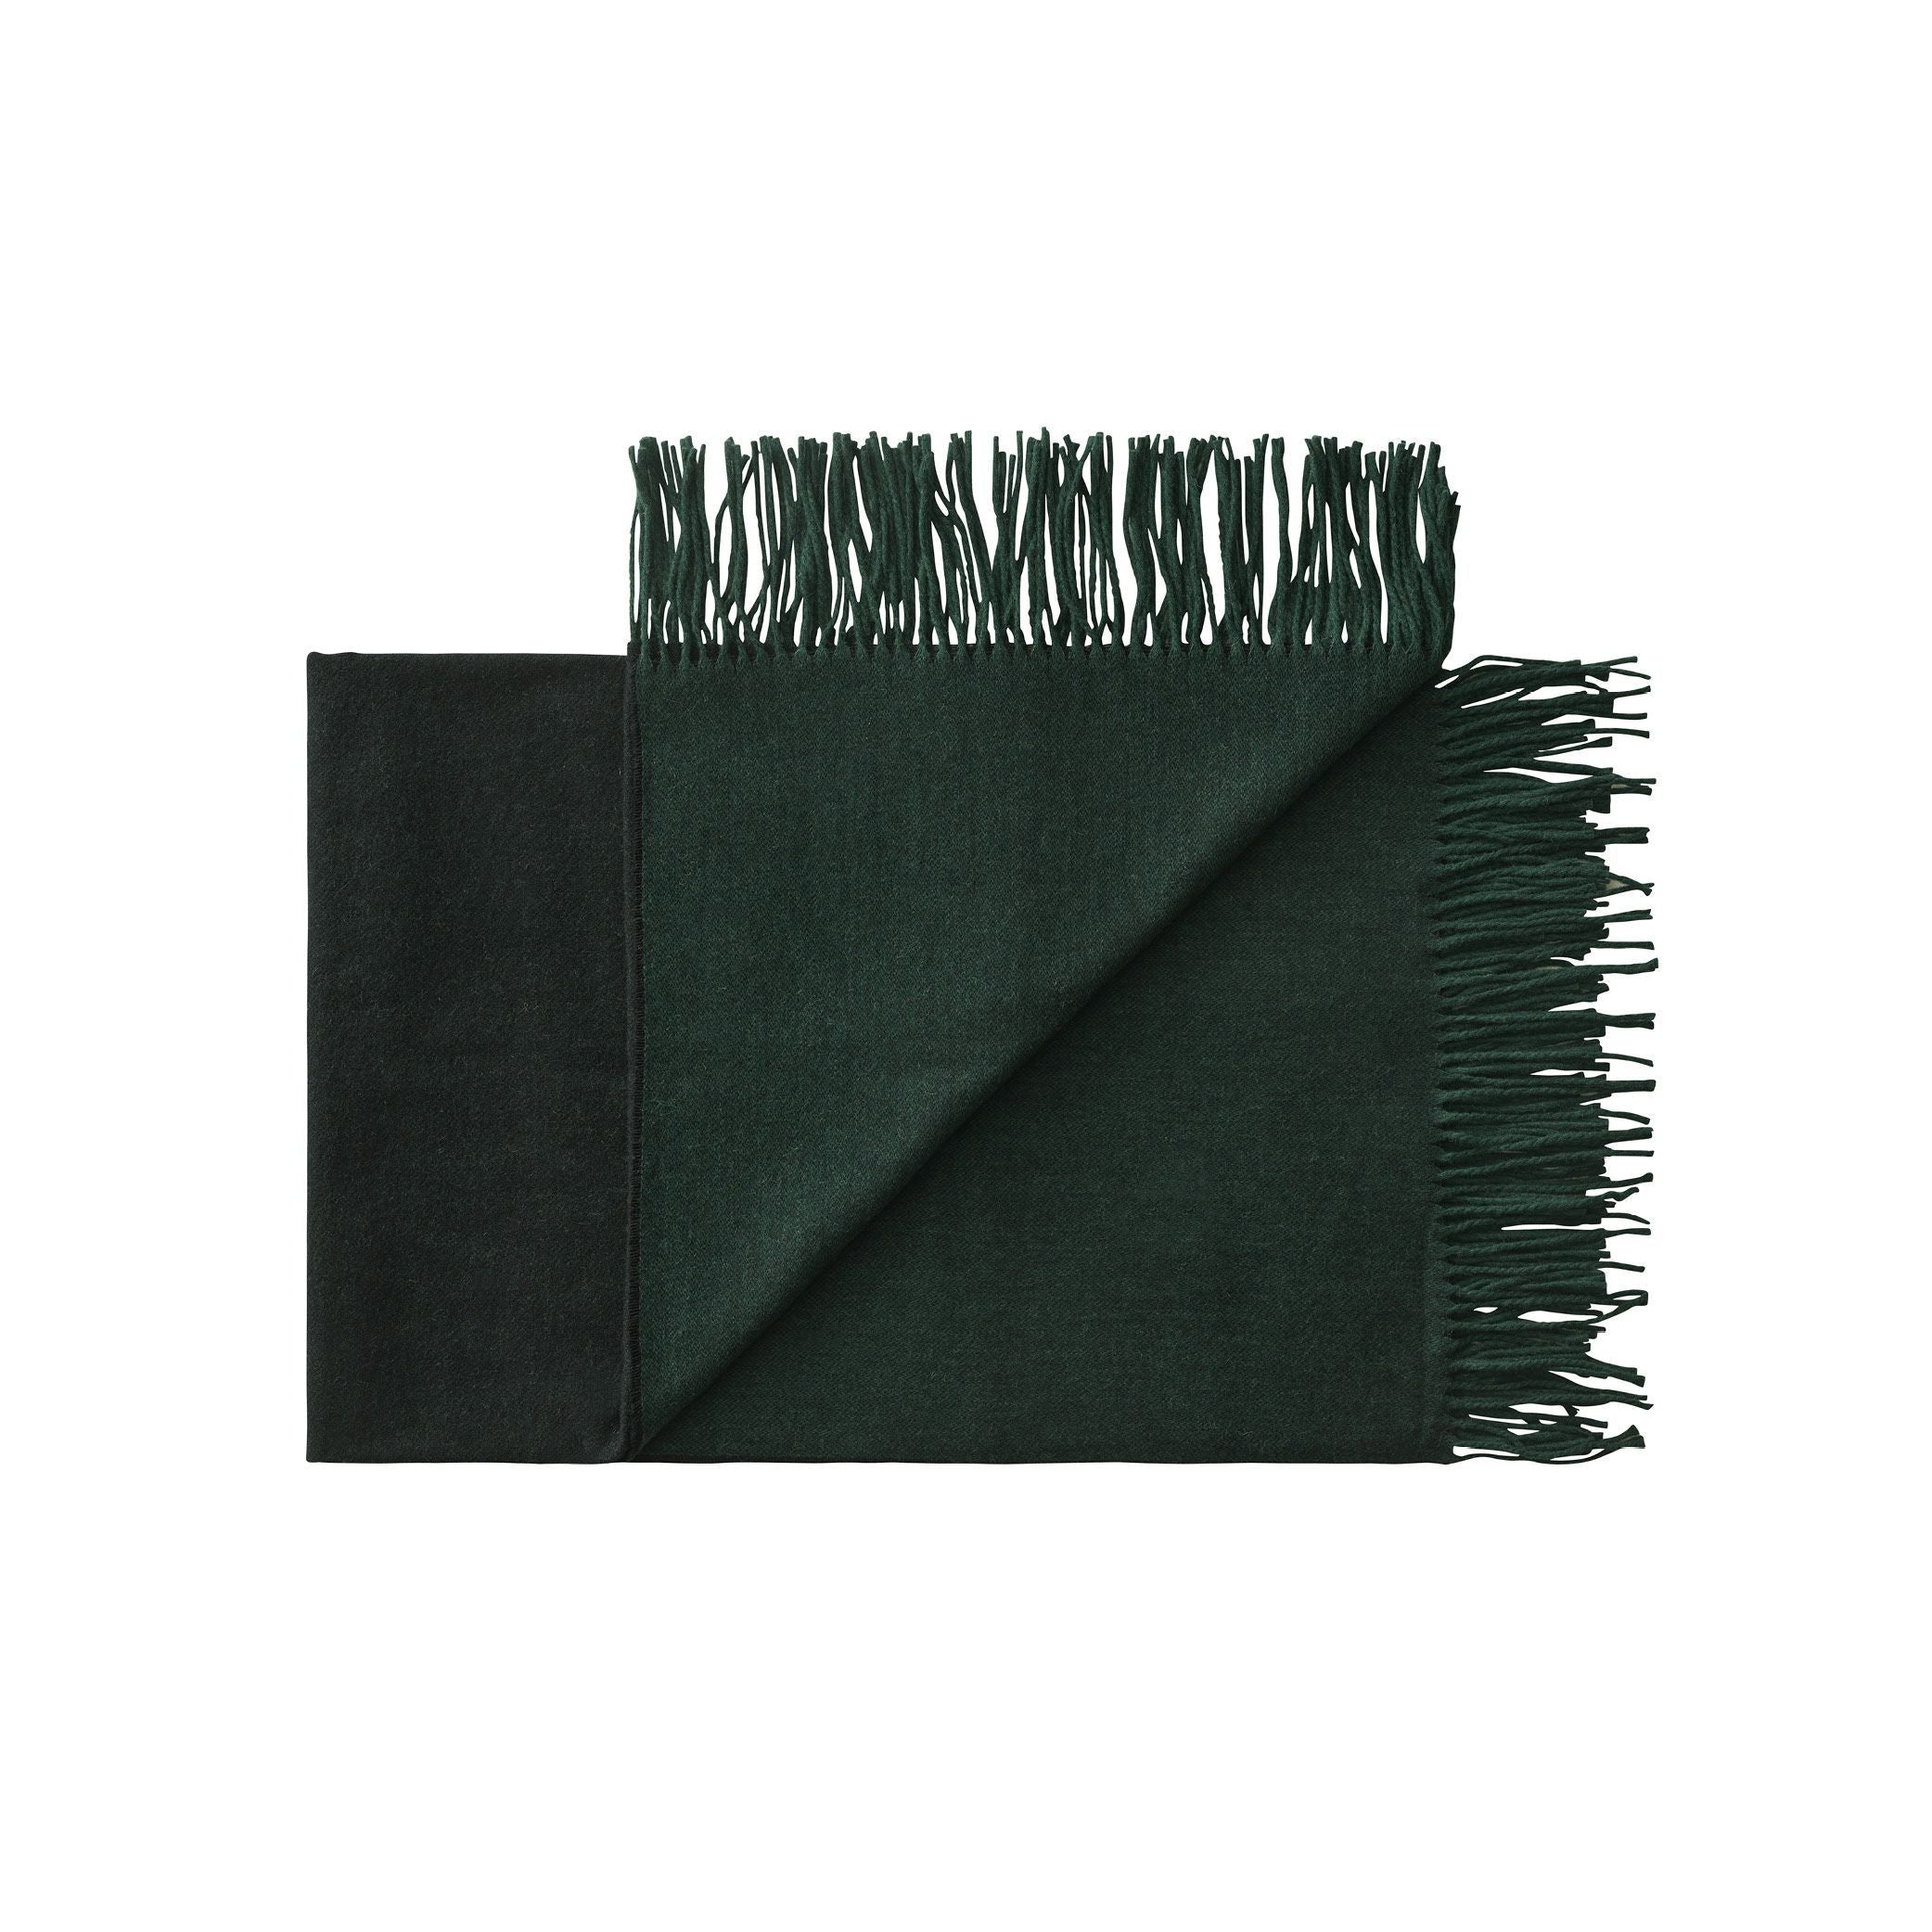 Silkorg Uldspinderi Franja Throw 170x140 cm, verde/negro